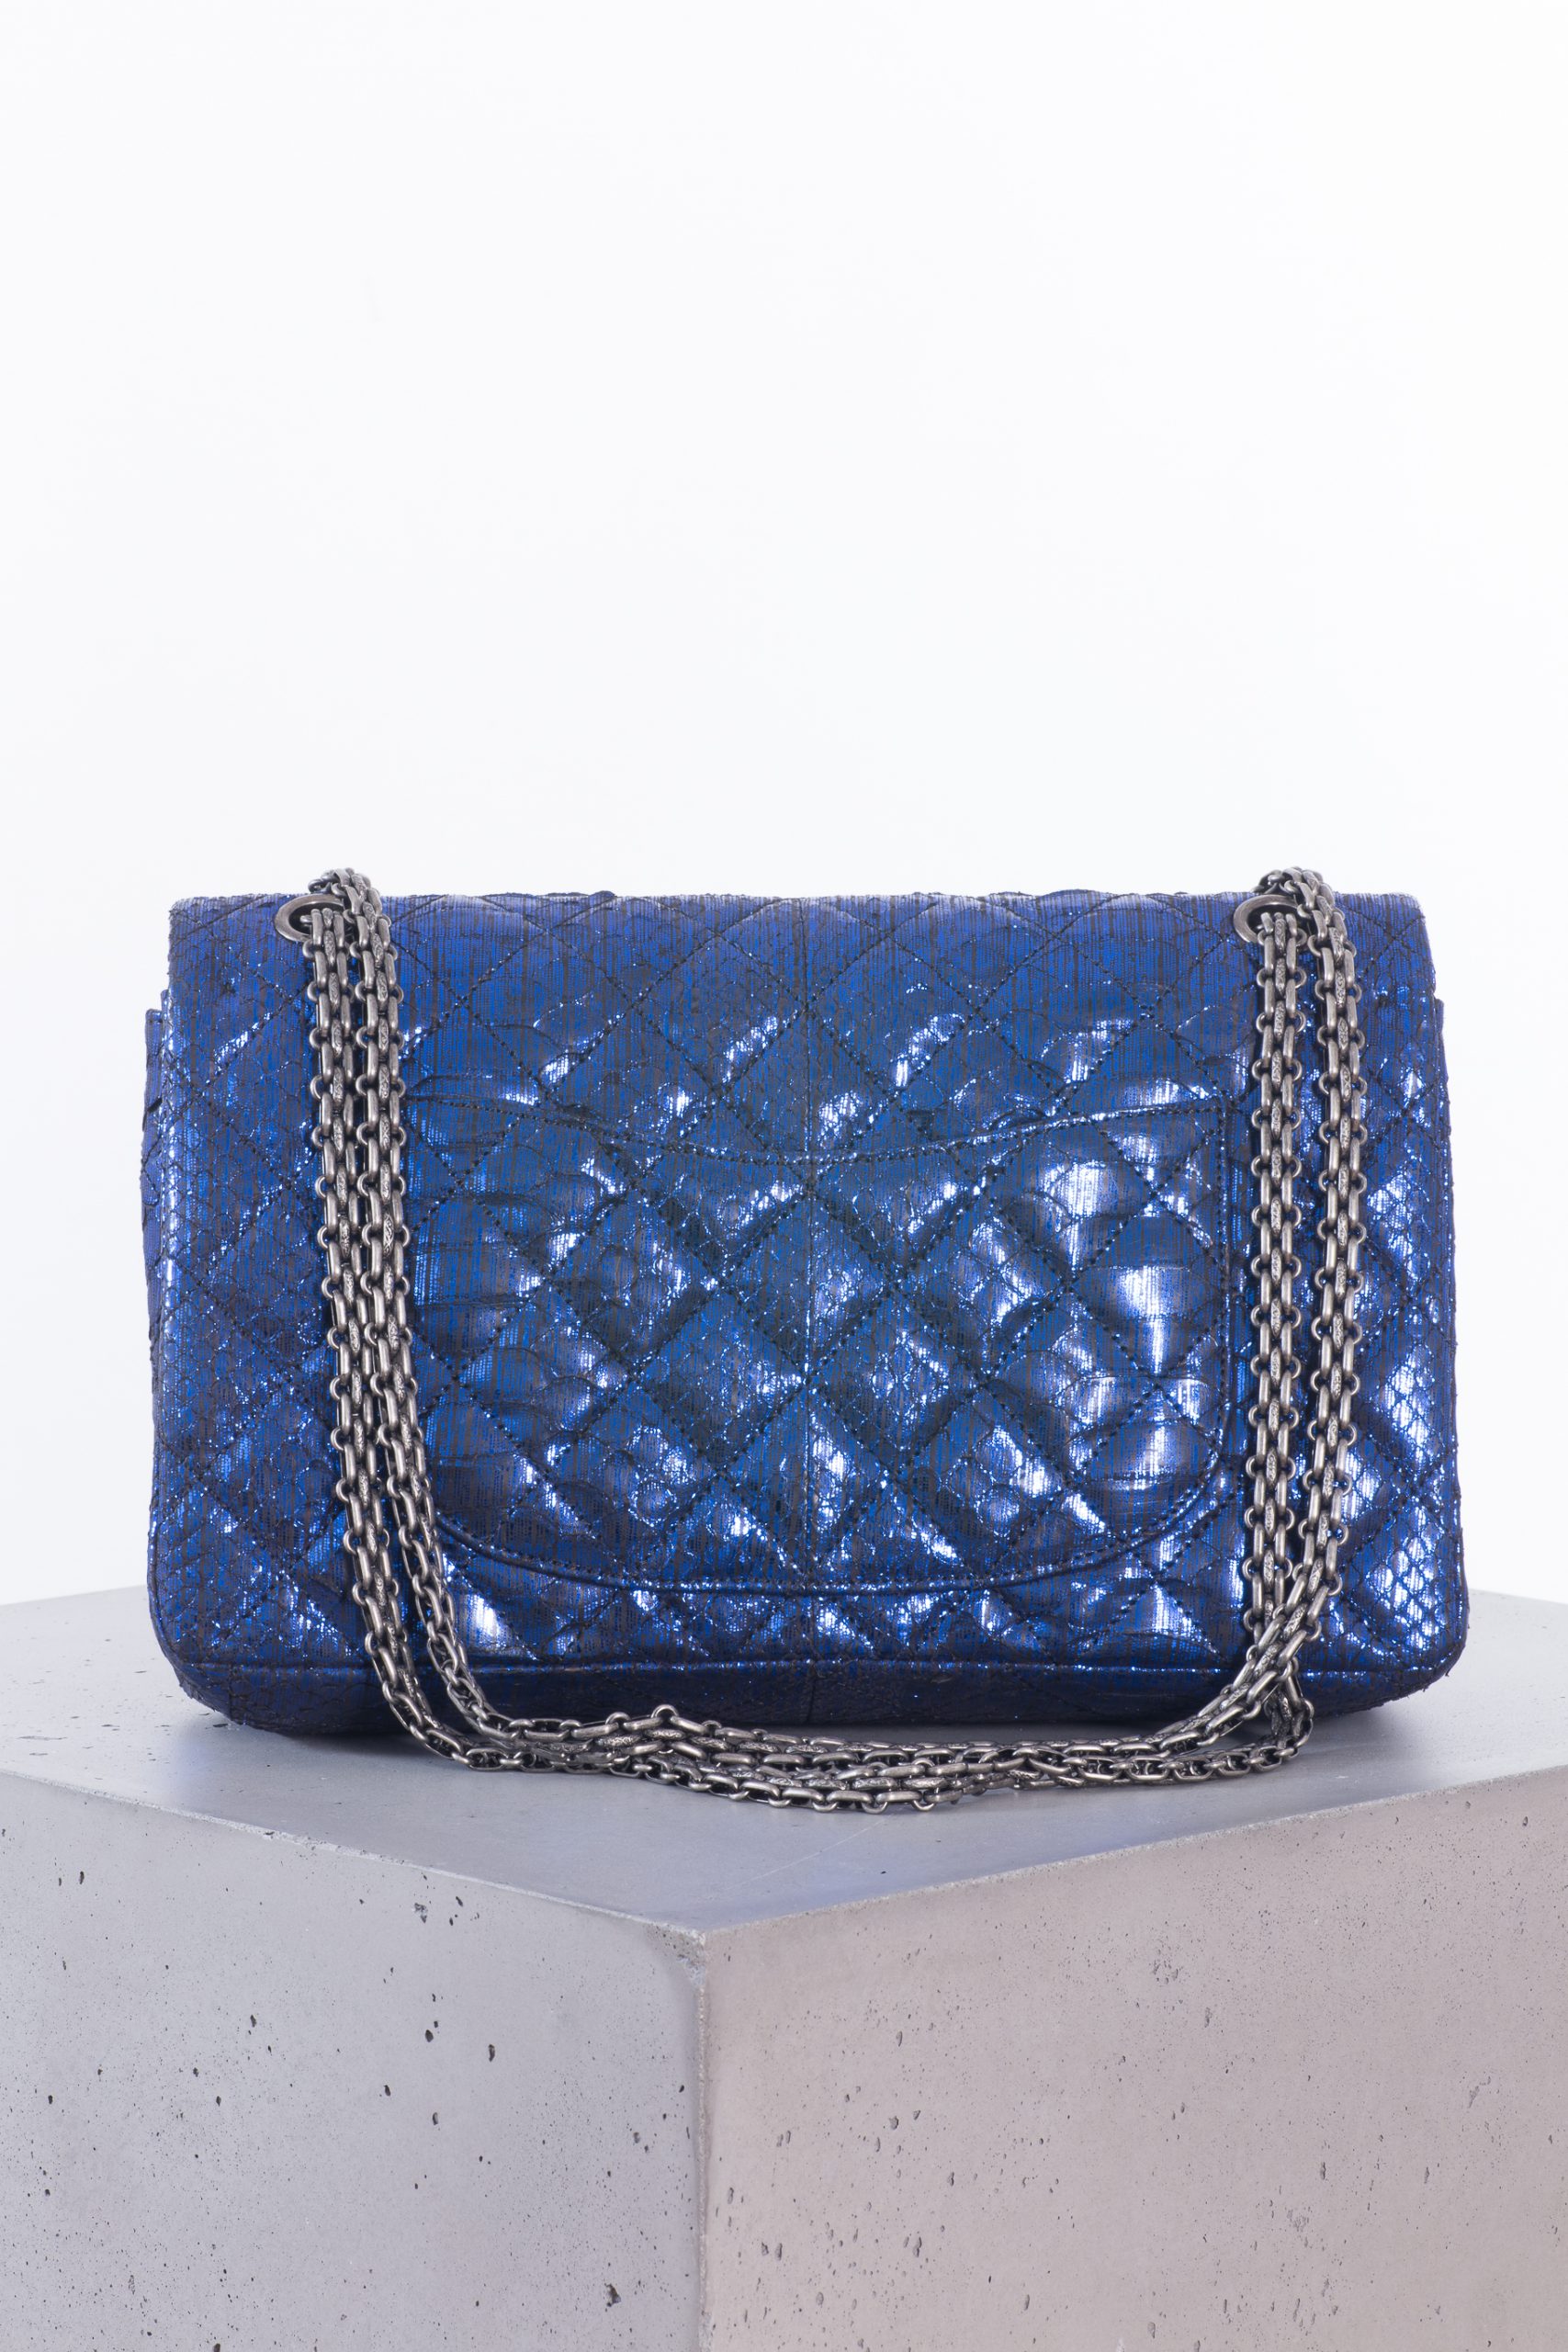 Chanel Denim Jacket, FR34 - Huntessa Luxury Online Consignment Boutique